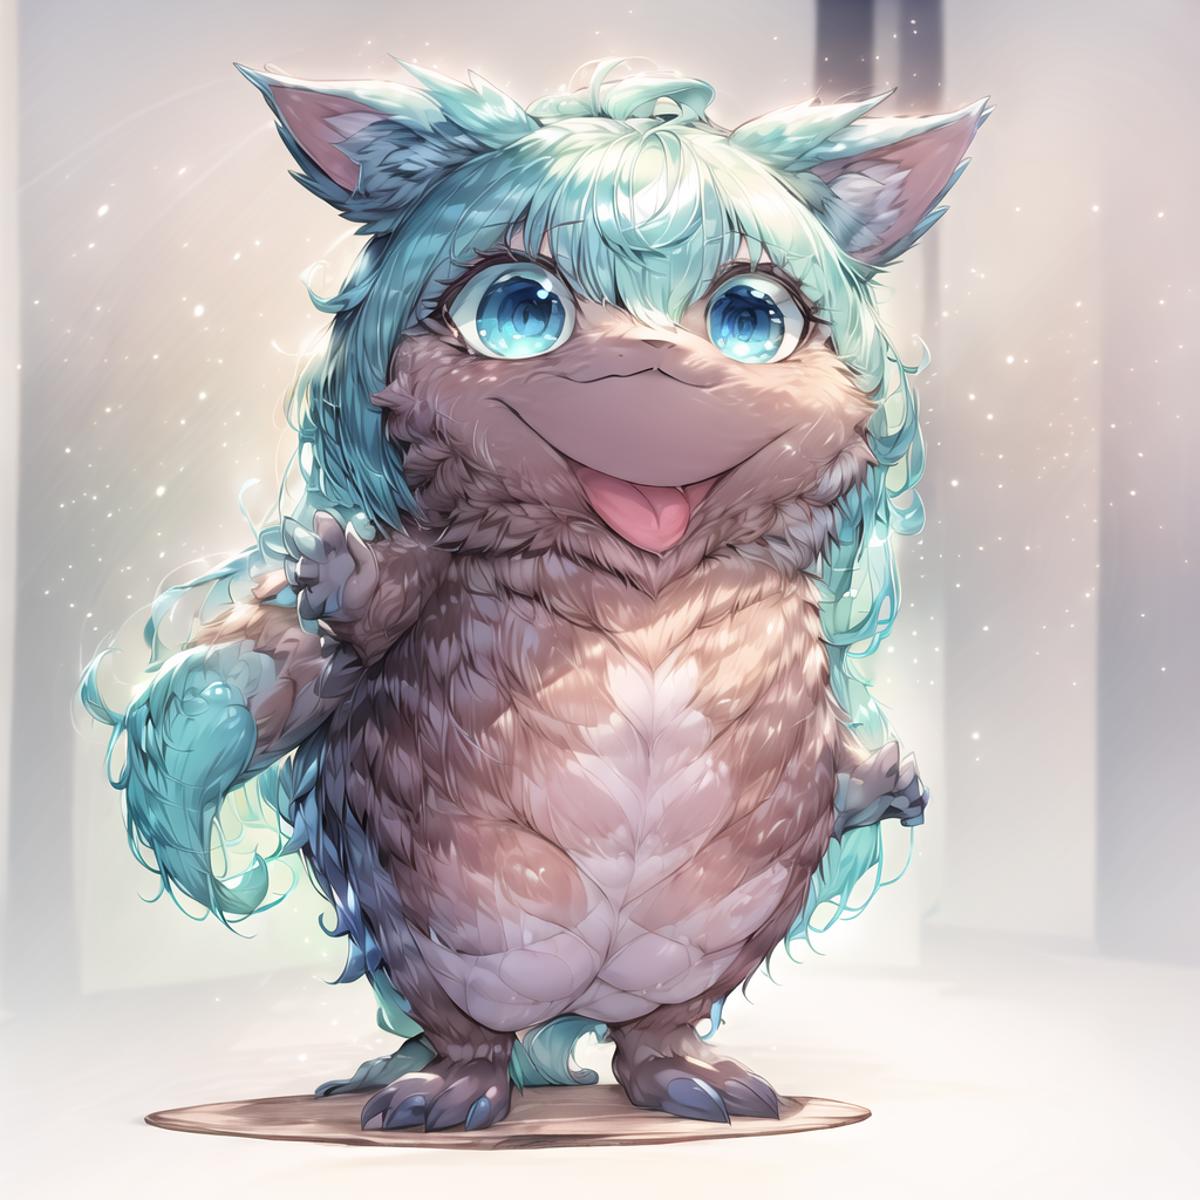 Shiny Cute Character image by epu2172